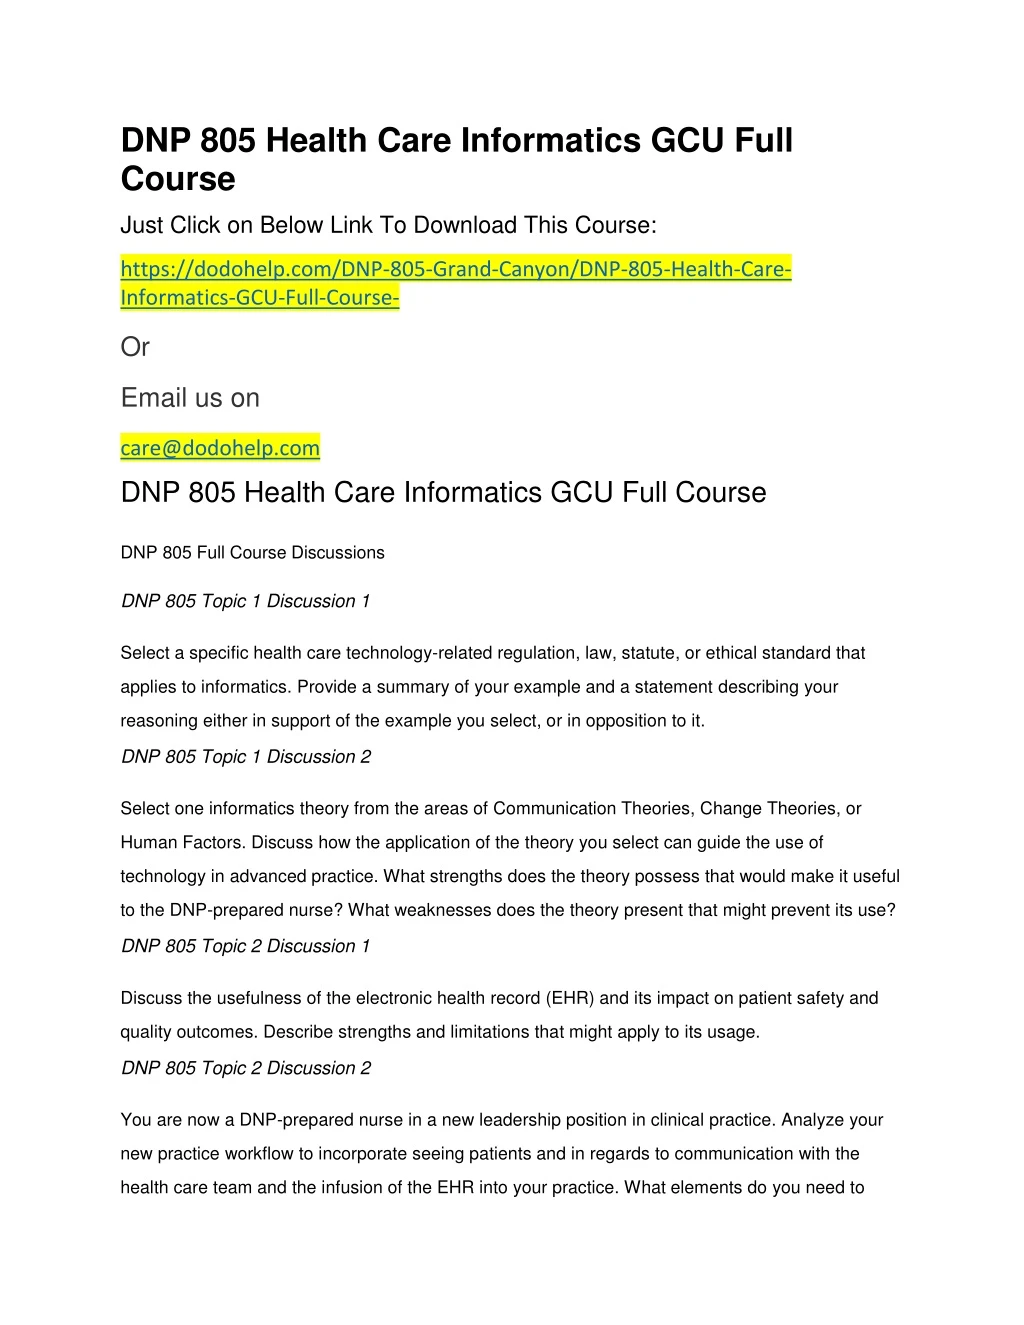 dnp 805 health care informatics gcu full course